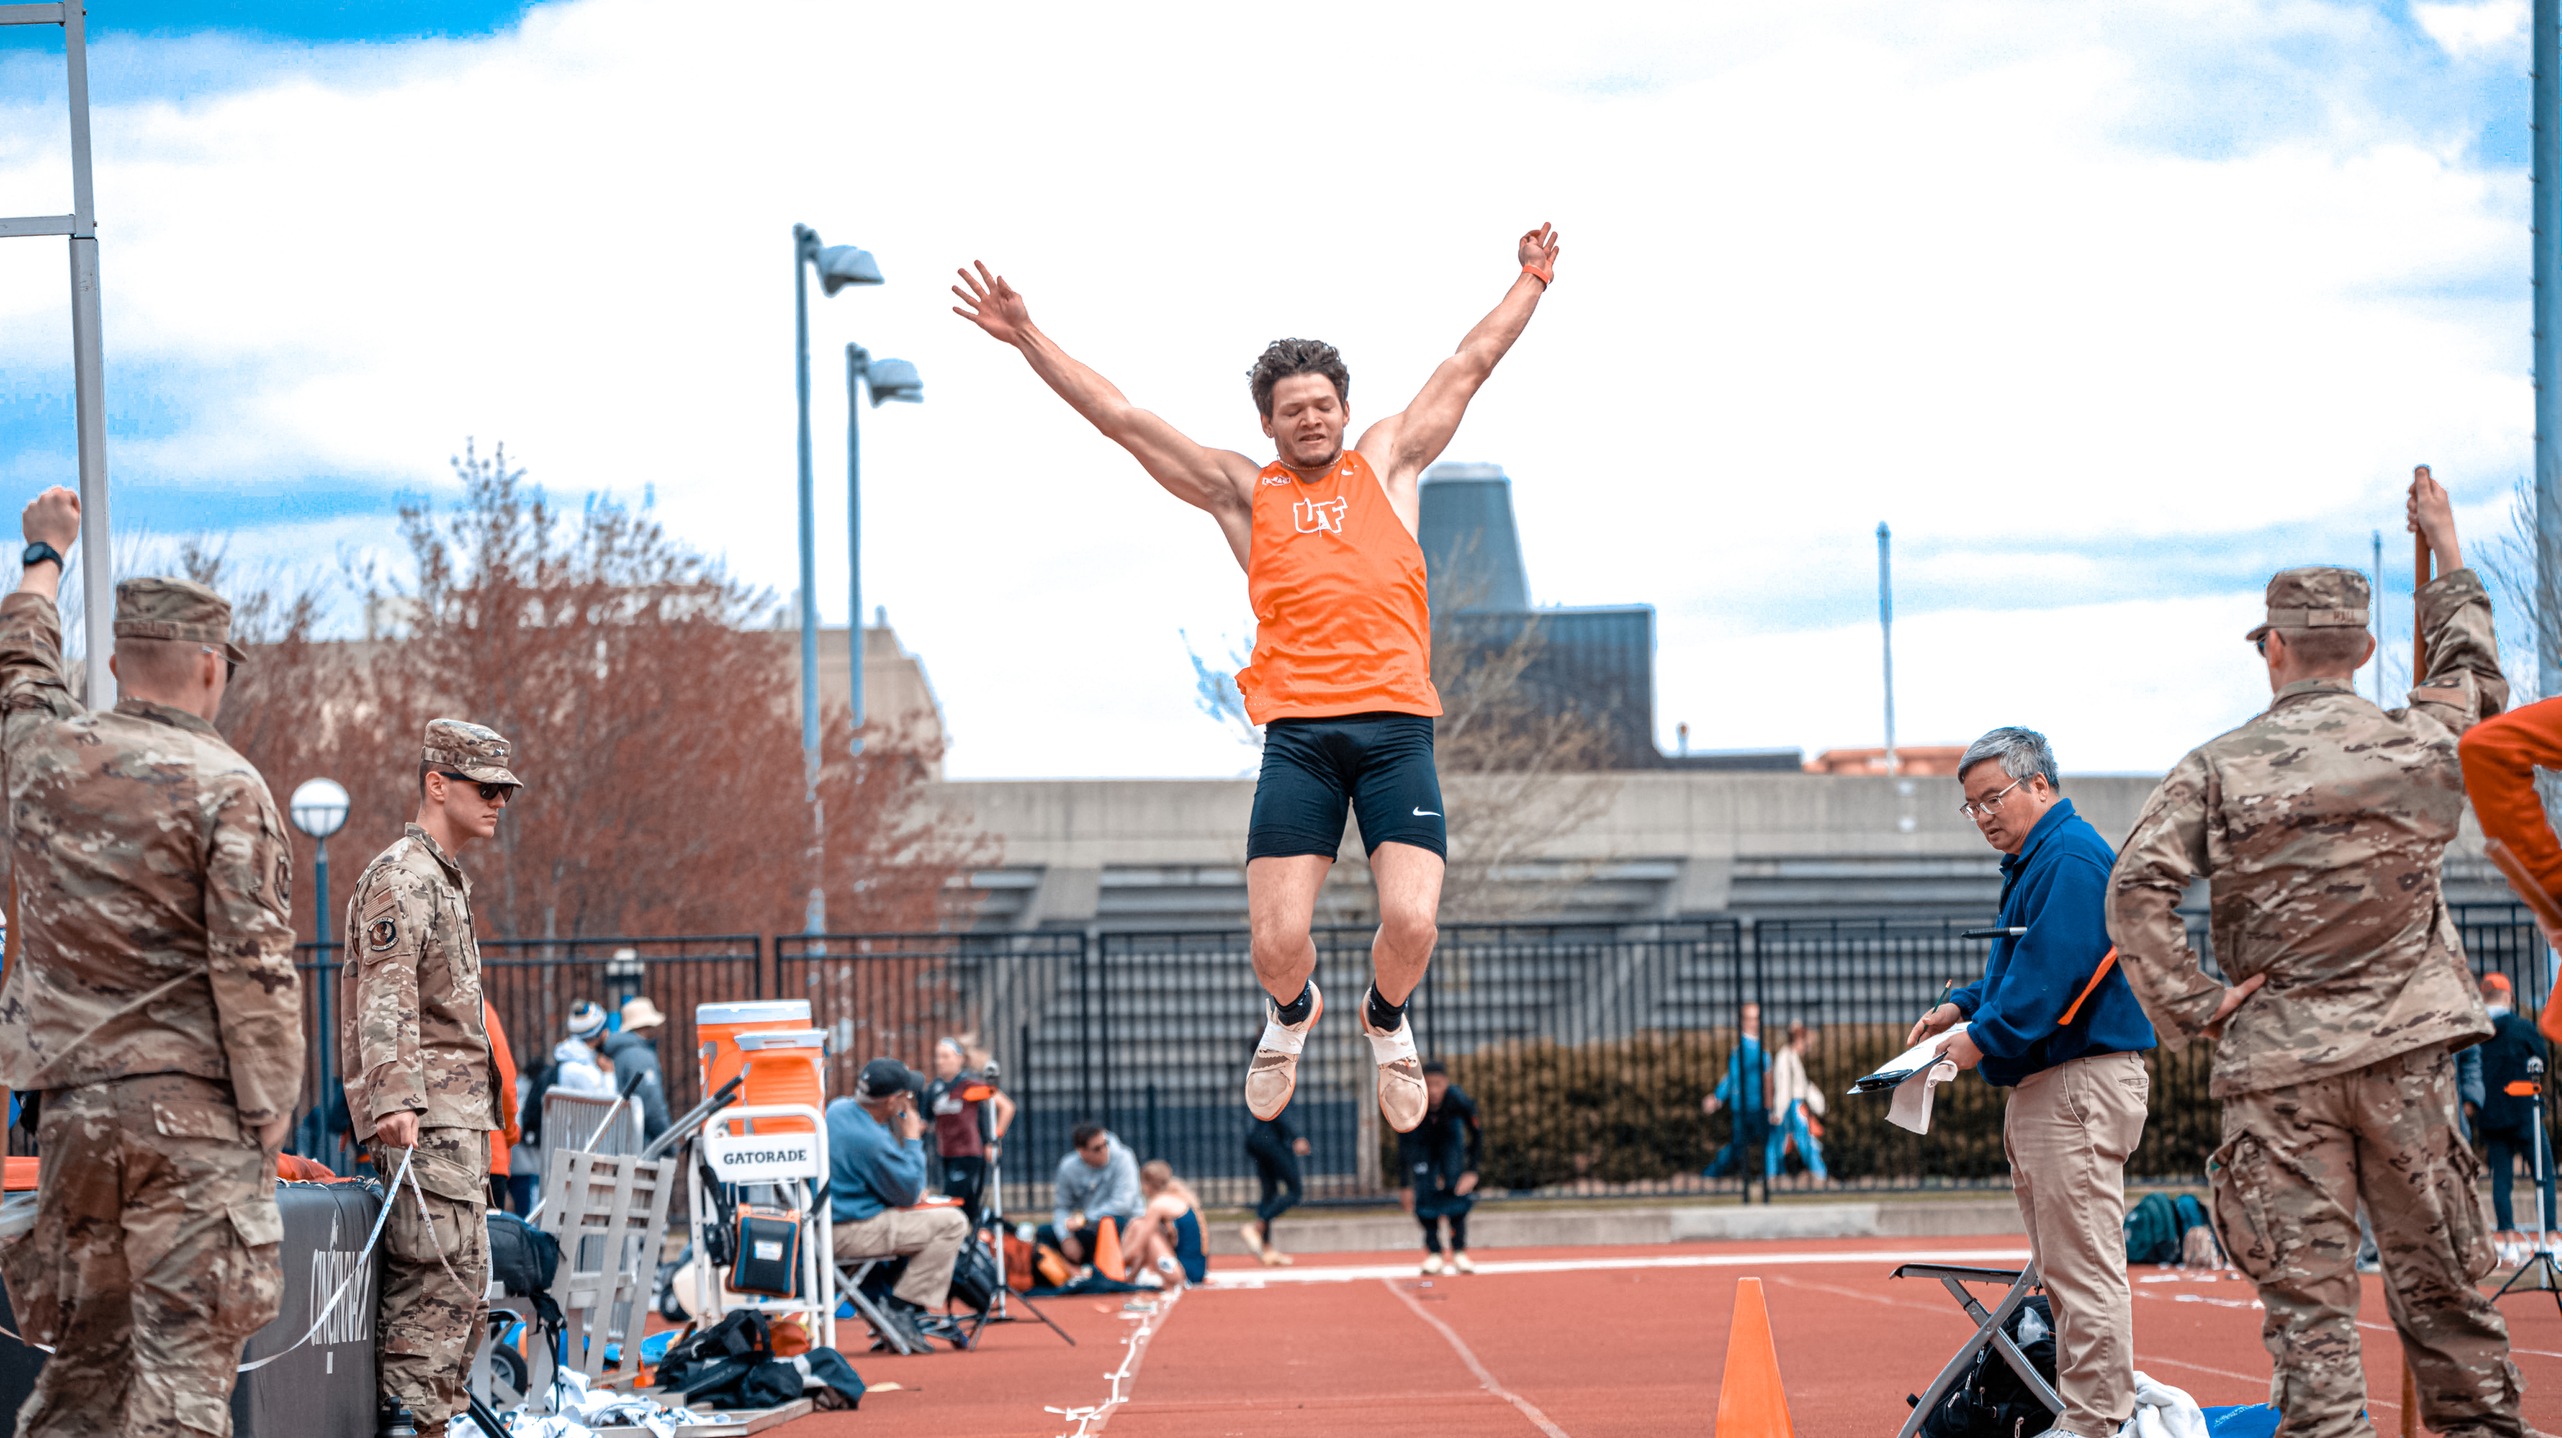 long jump guy in orange jumping